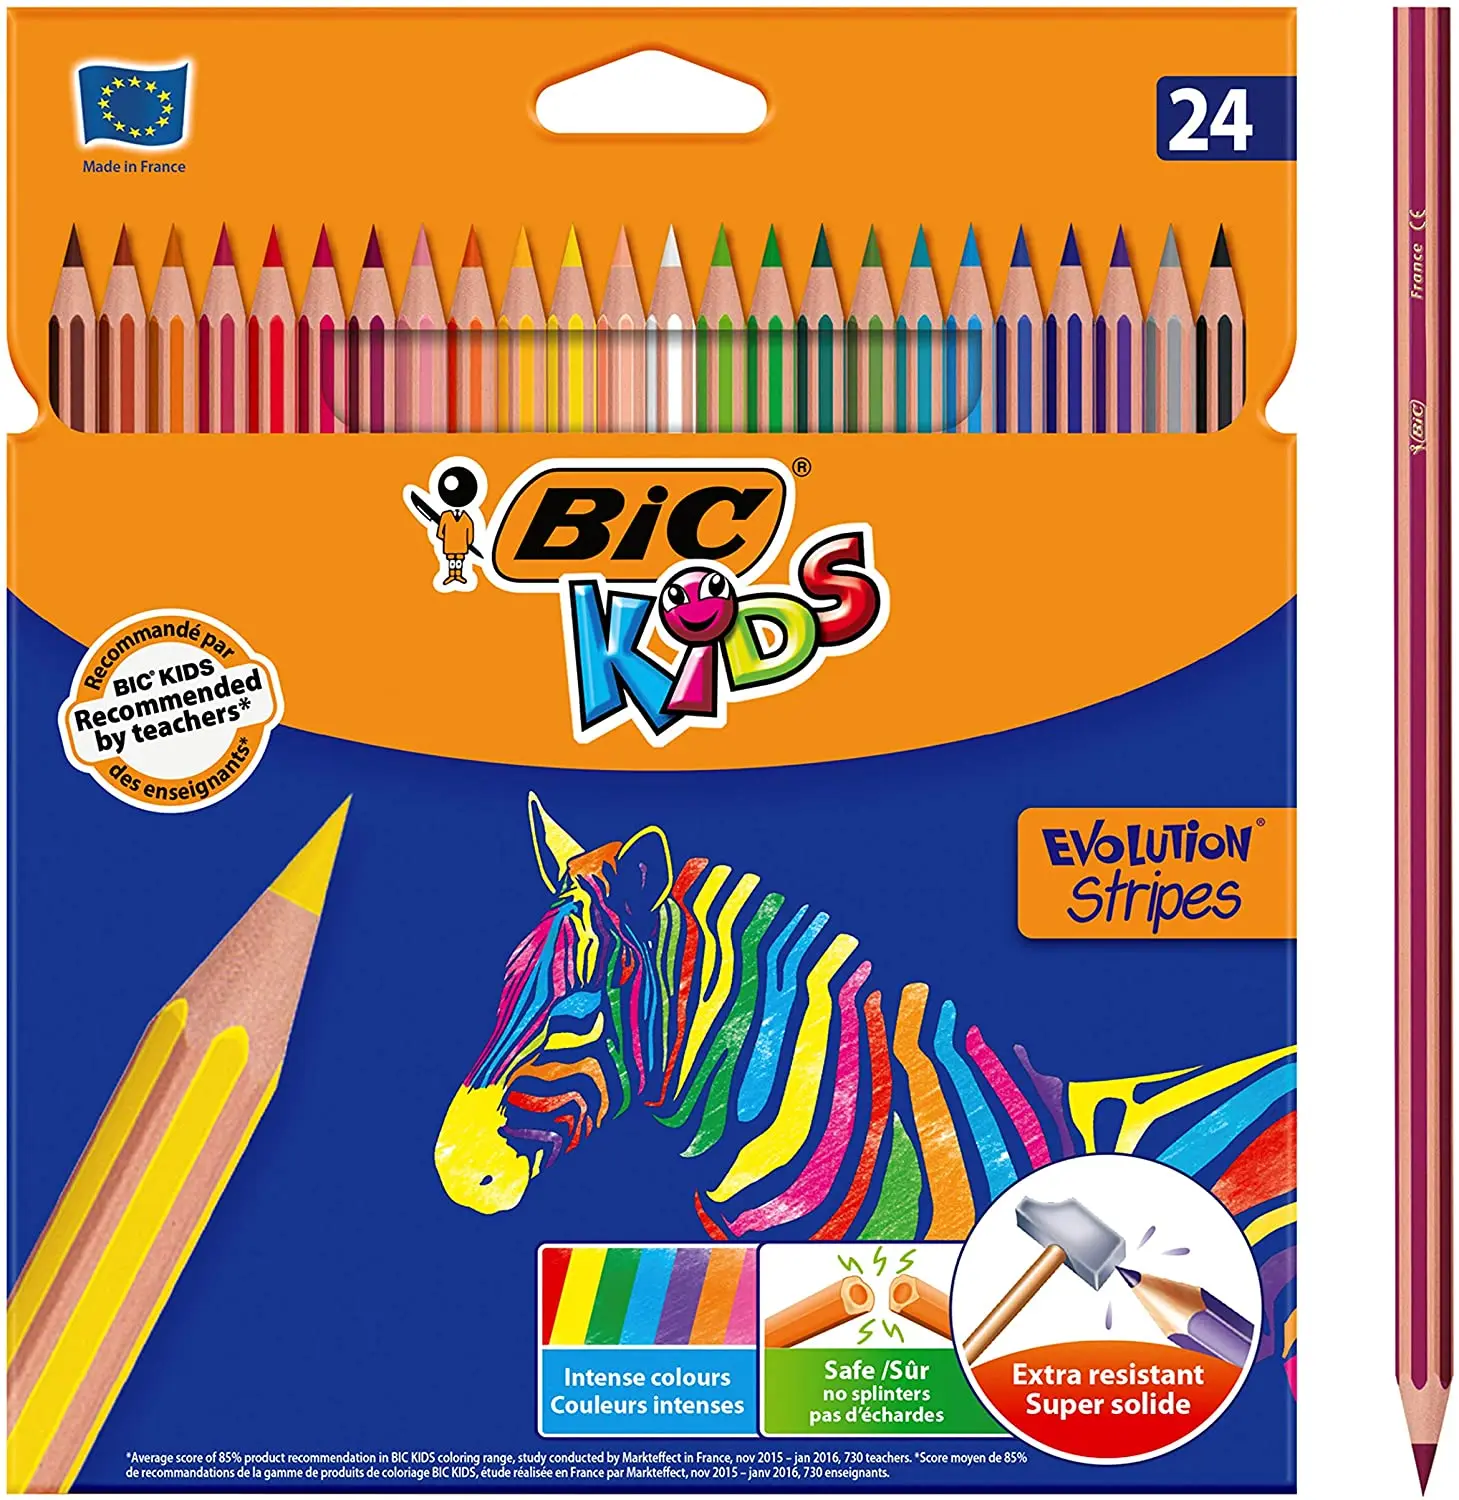 Bic Kids Evolution Stripes Caja de 24 Lapices de Colores surtidos - Fabricados en Resina - Punta Ult